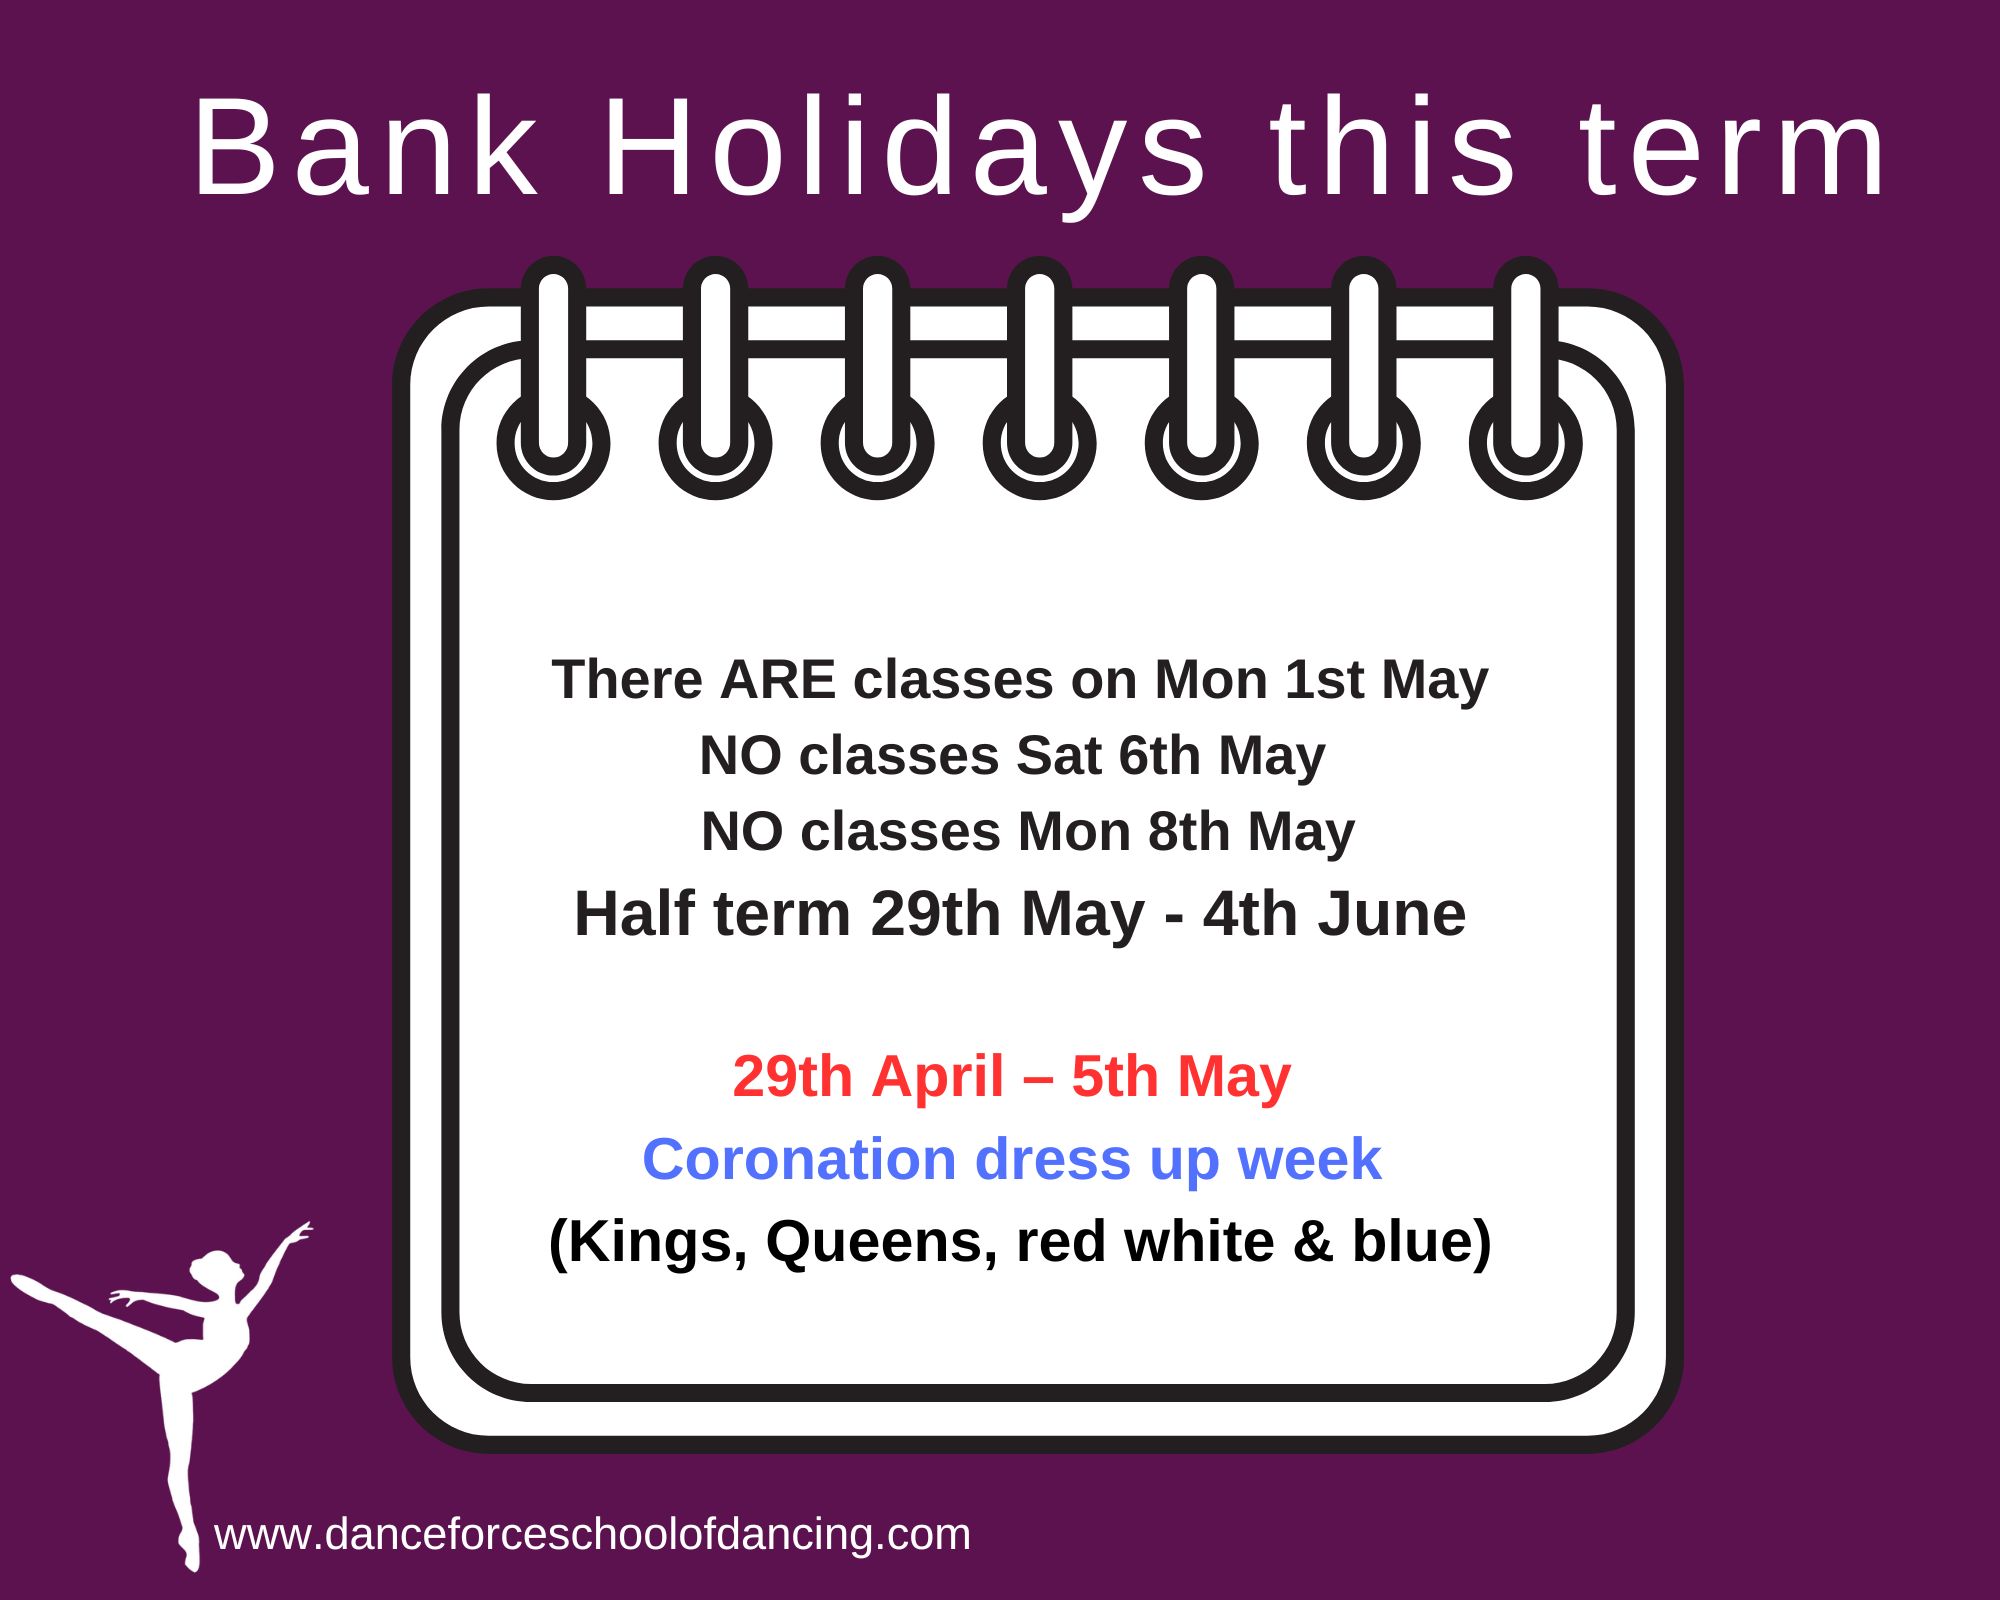 Bank Holidays this term